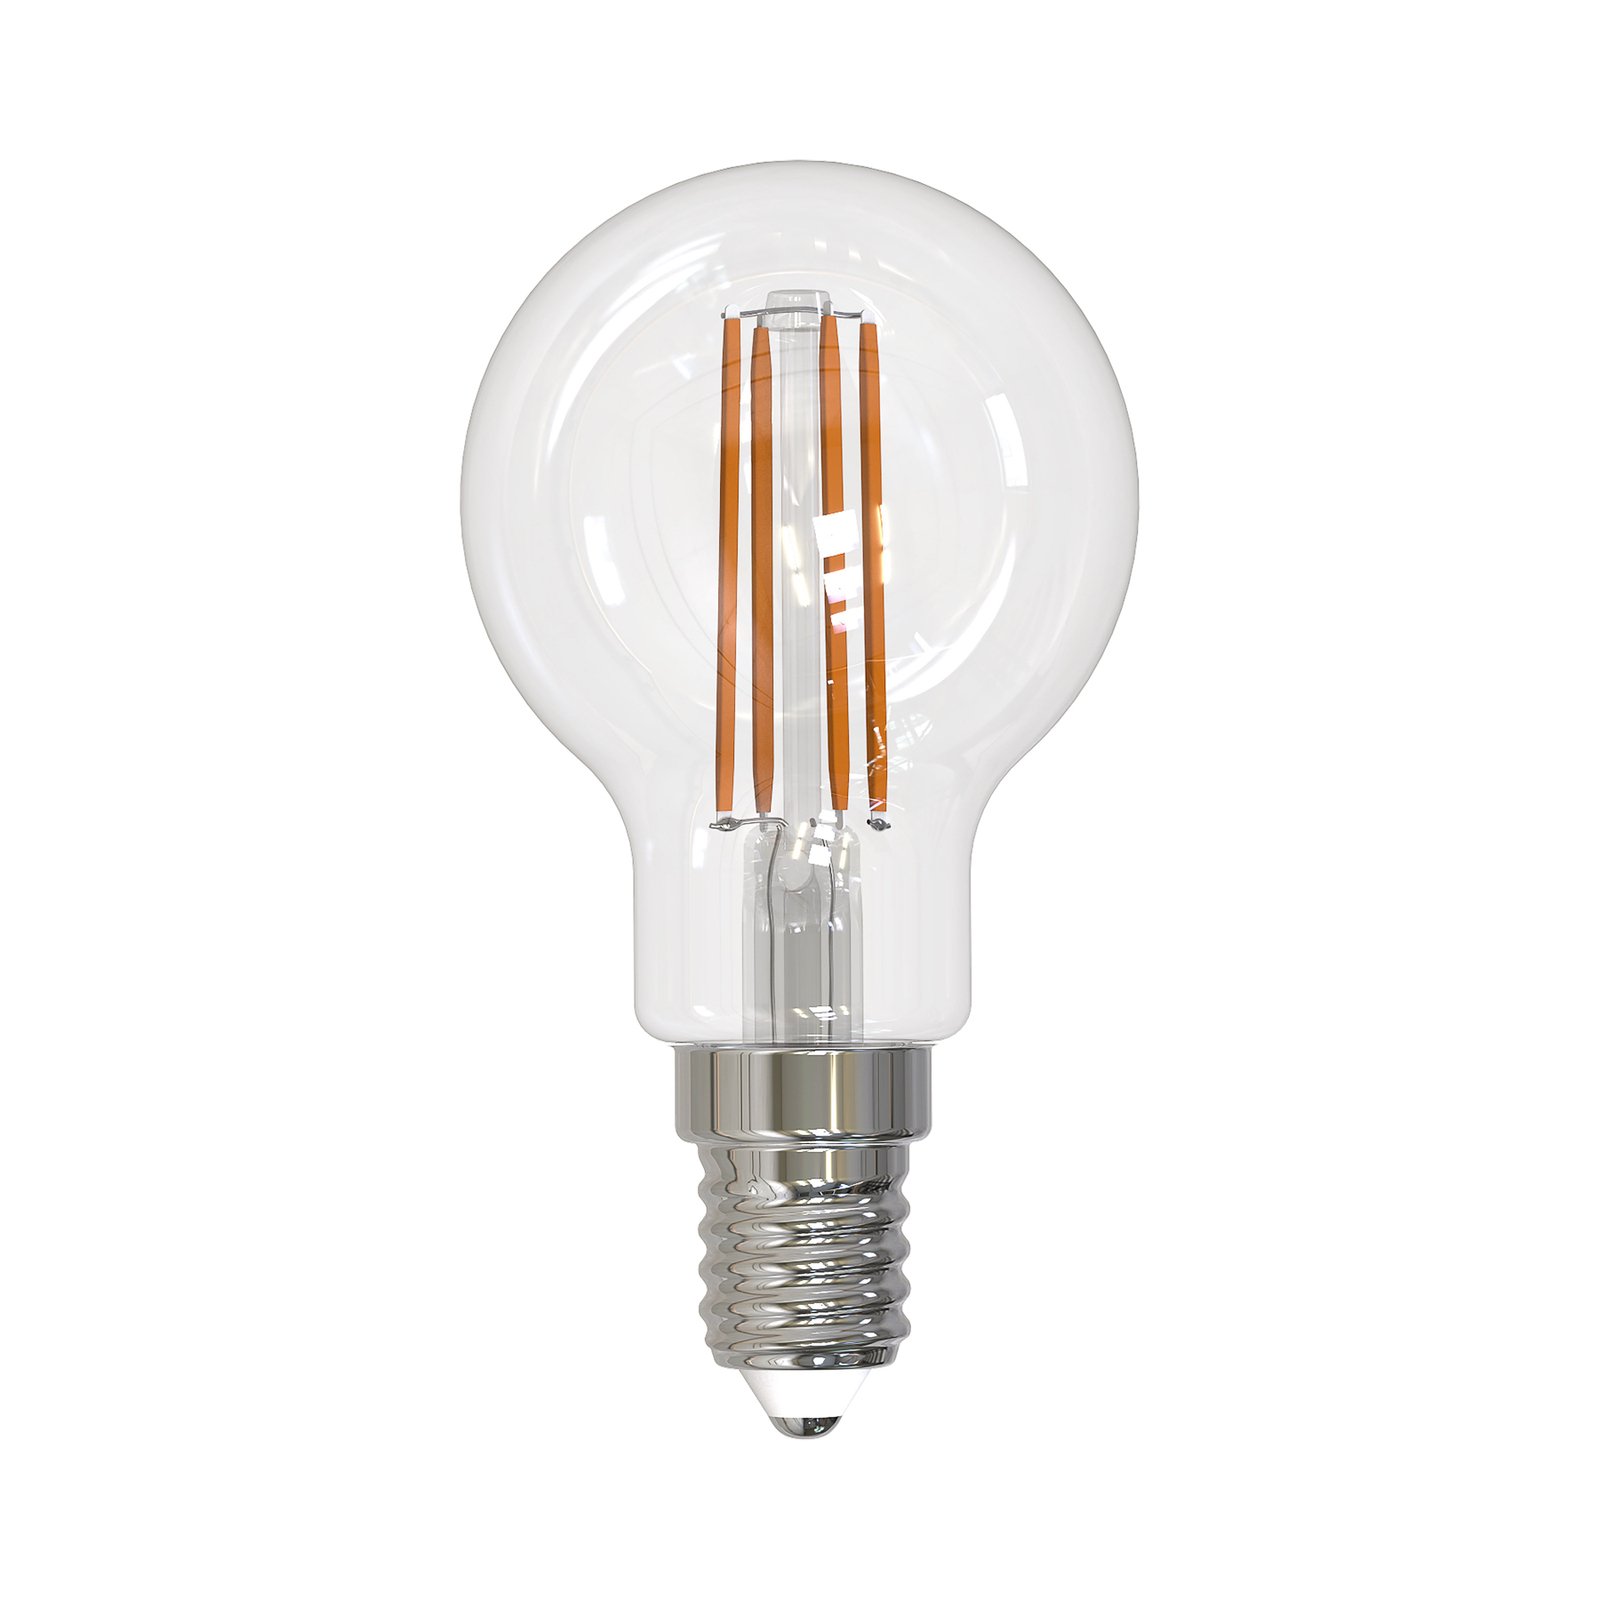 Arcchio bombilla LED con filamento E14 G45, juego de 3, 4000 K